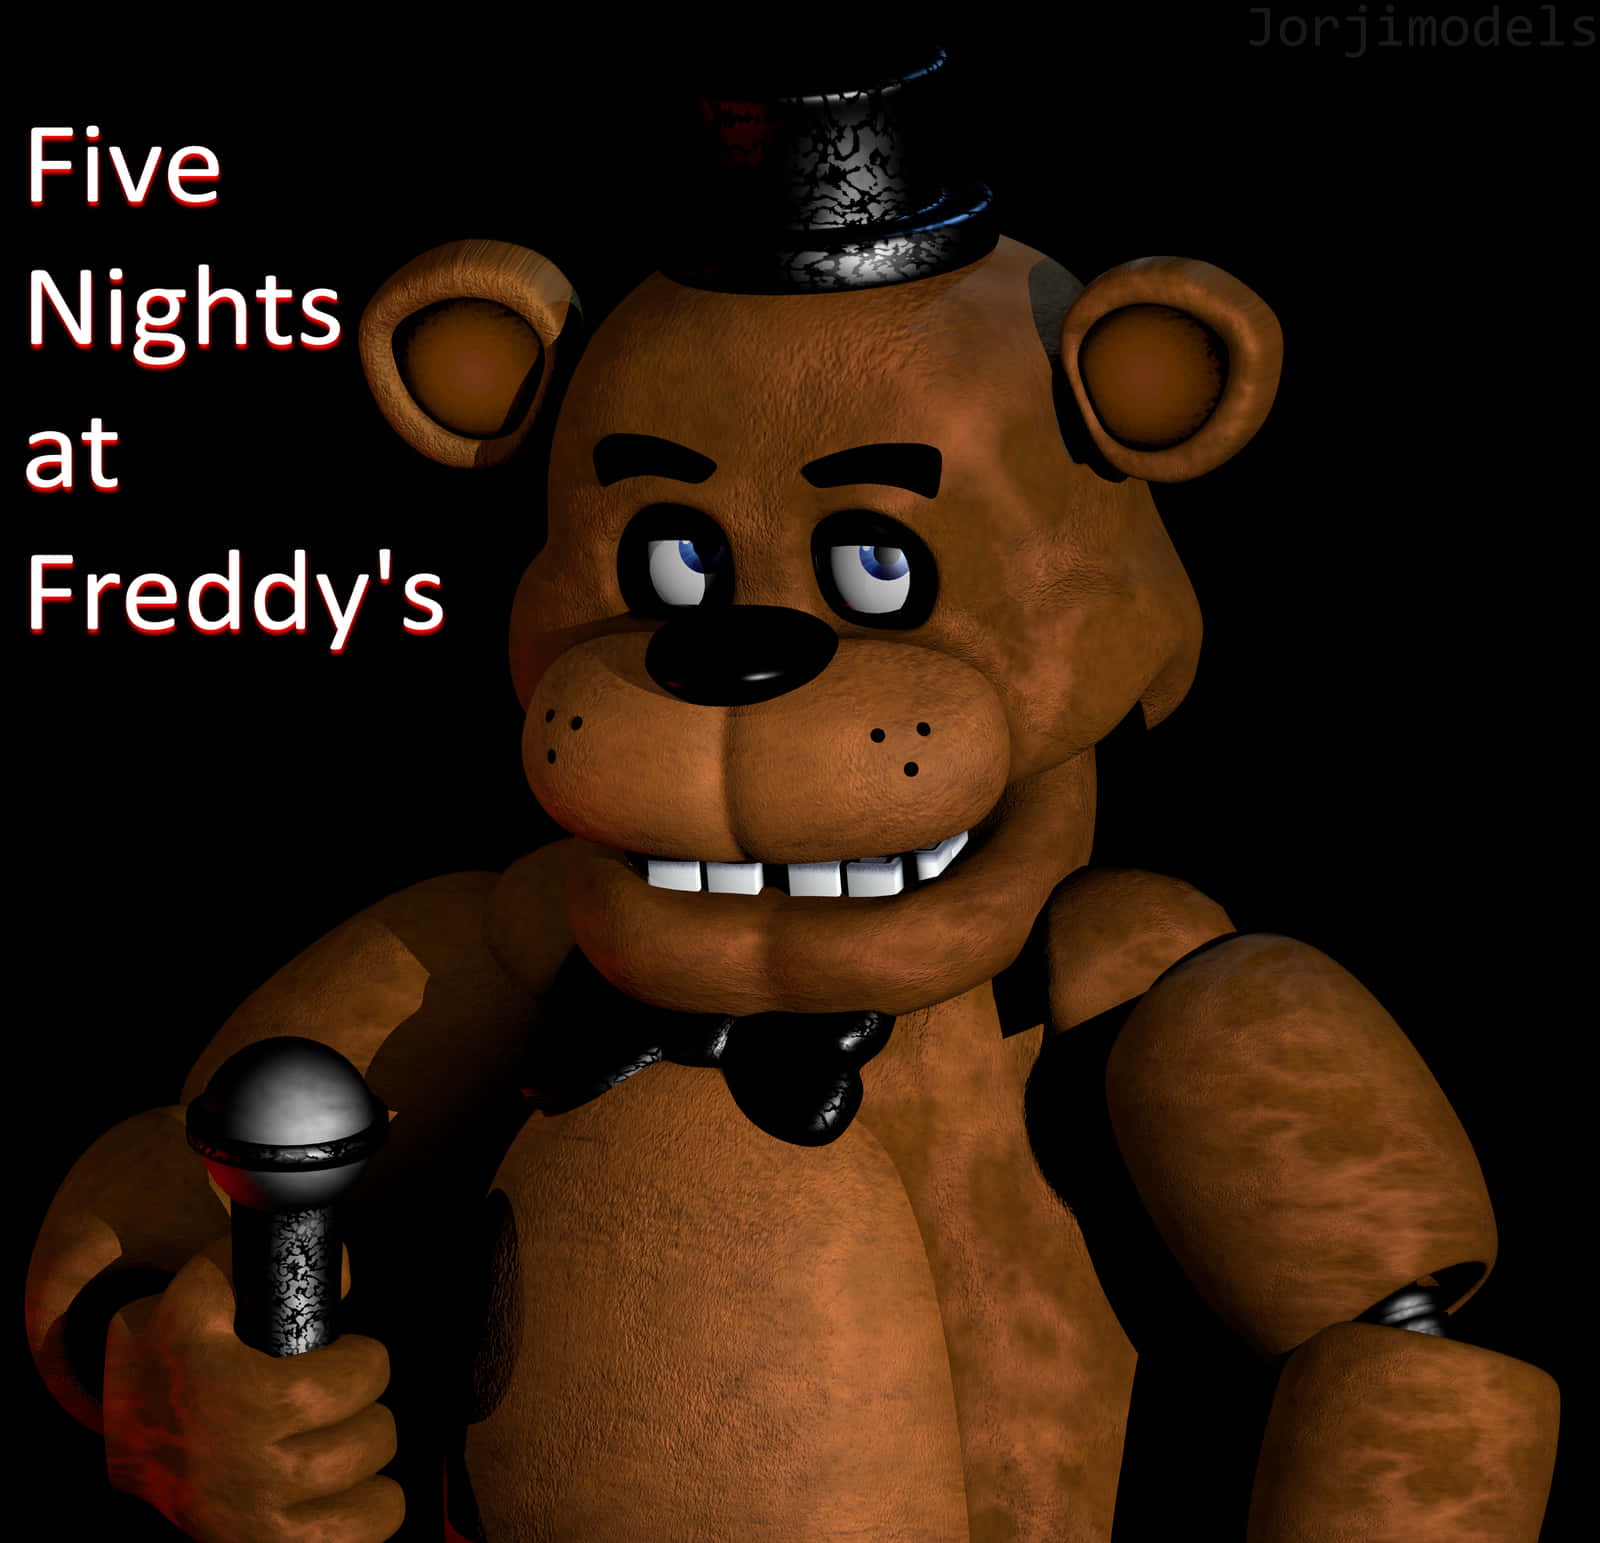 A fun and colorful image of Freddy Fazbear